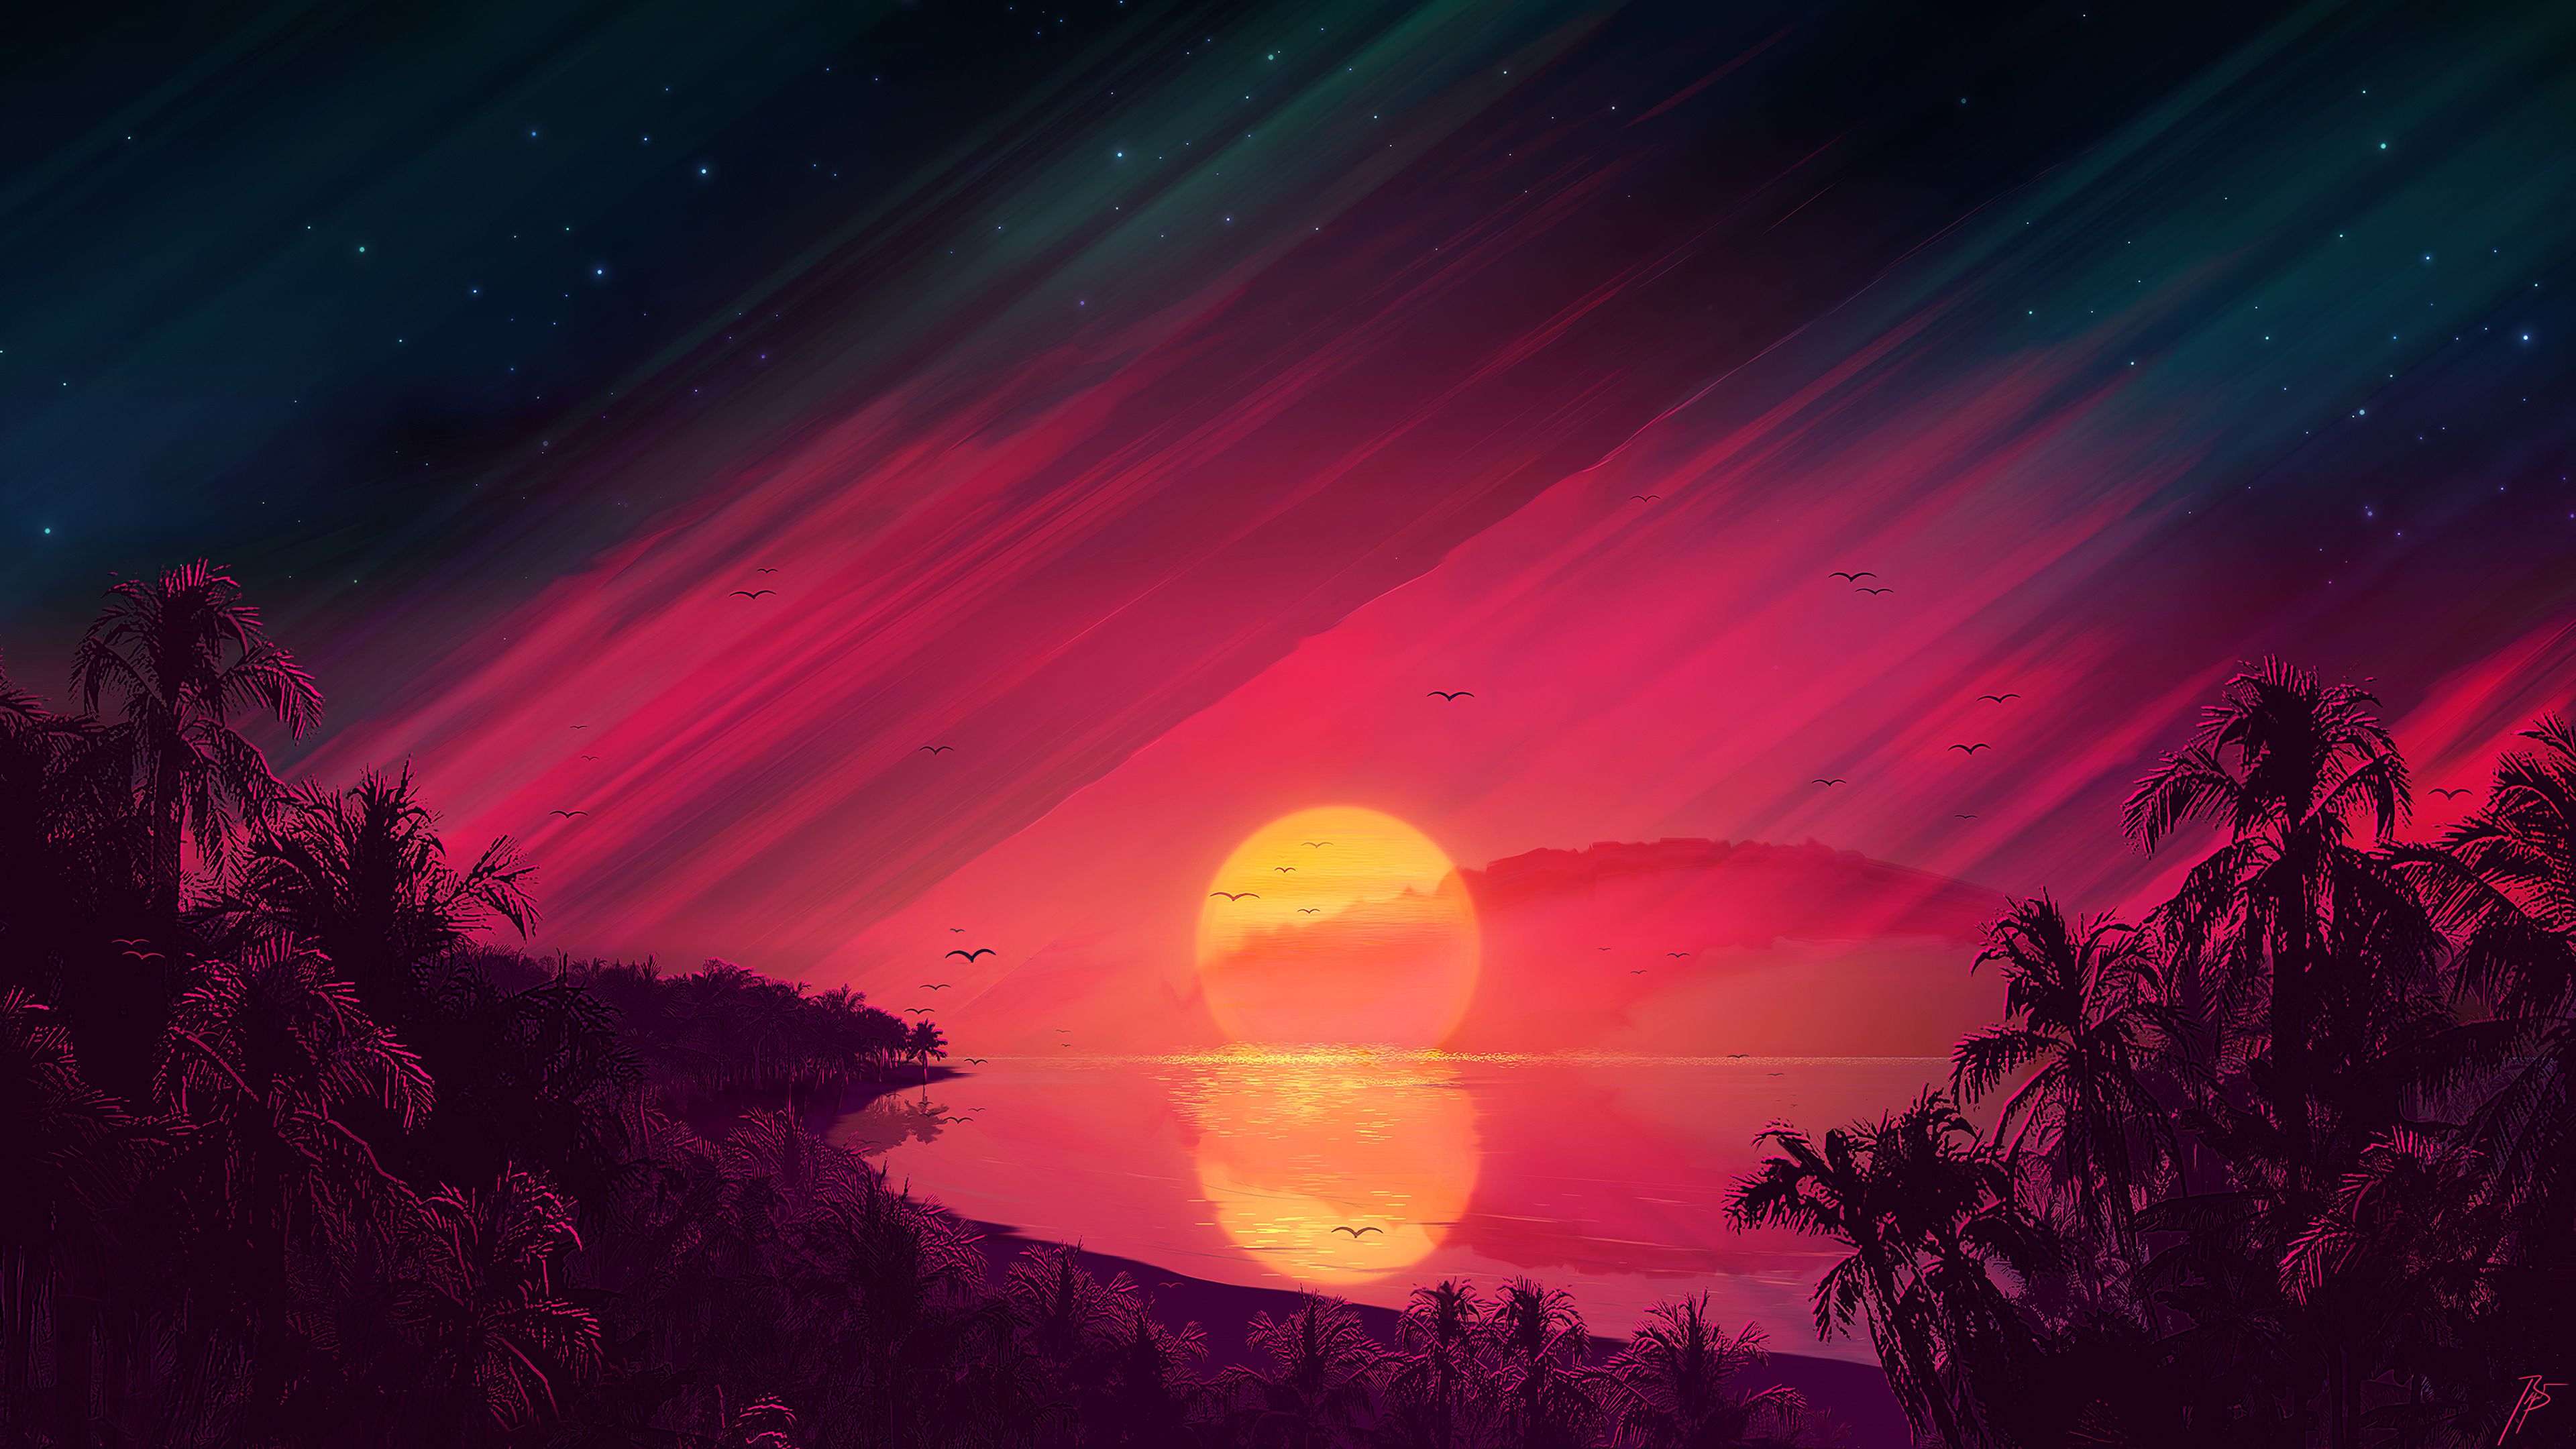 Beautiful Sunrise Lake Reflection 4k, HD Artist, 4k Wallpaper, Image, Background, Photo and Picture